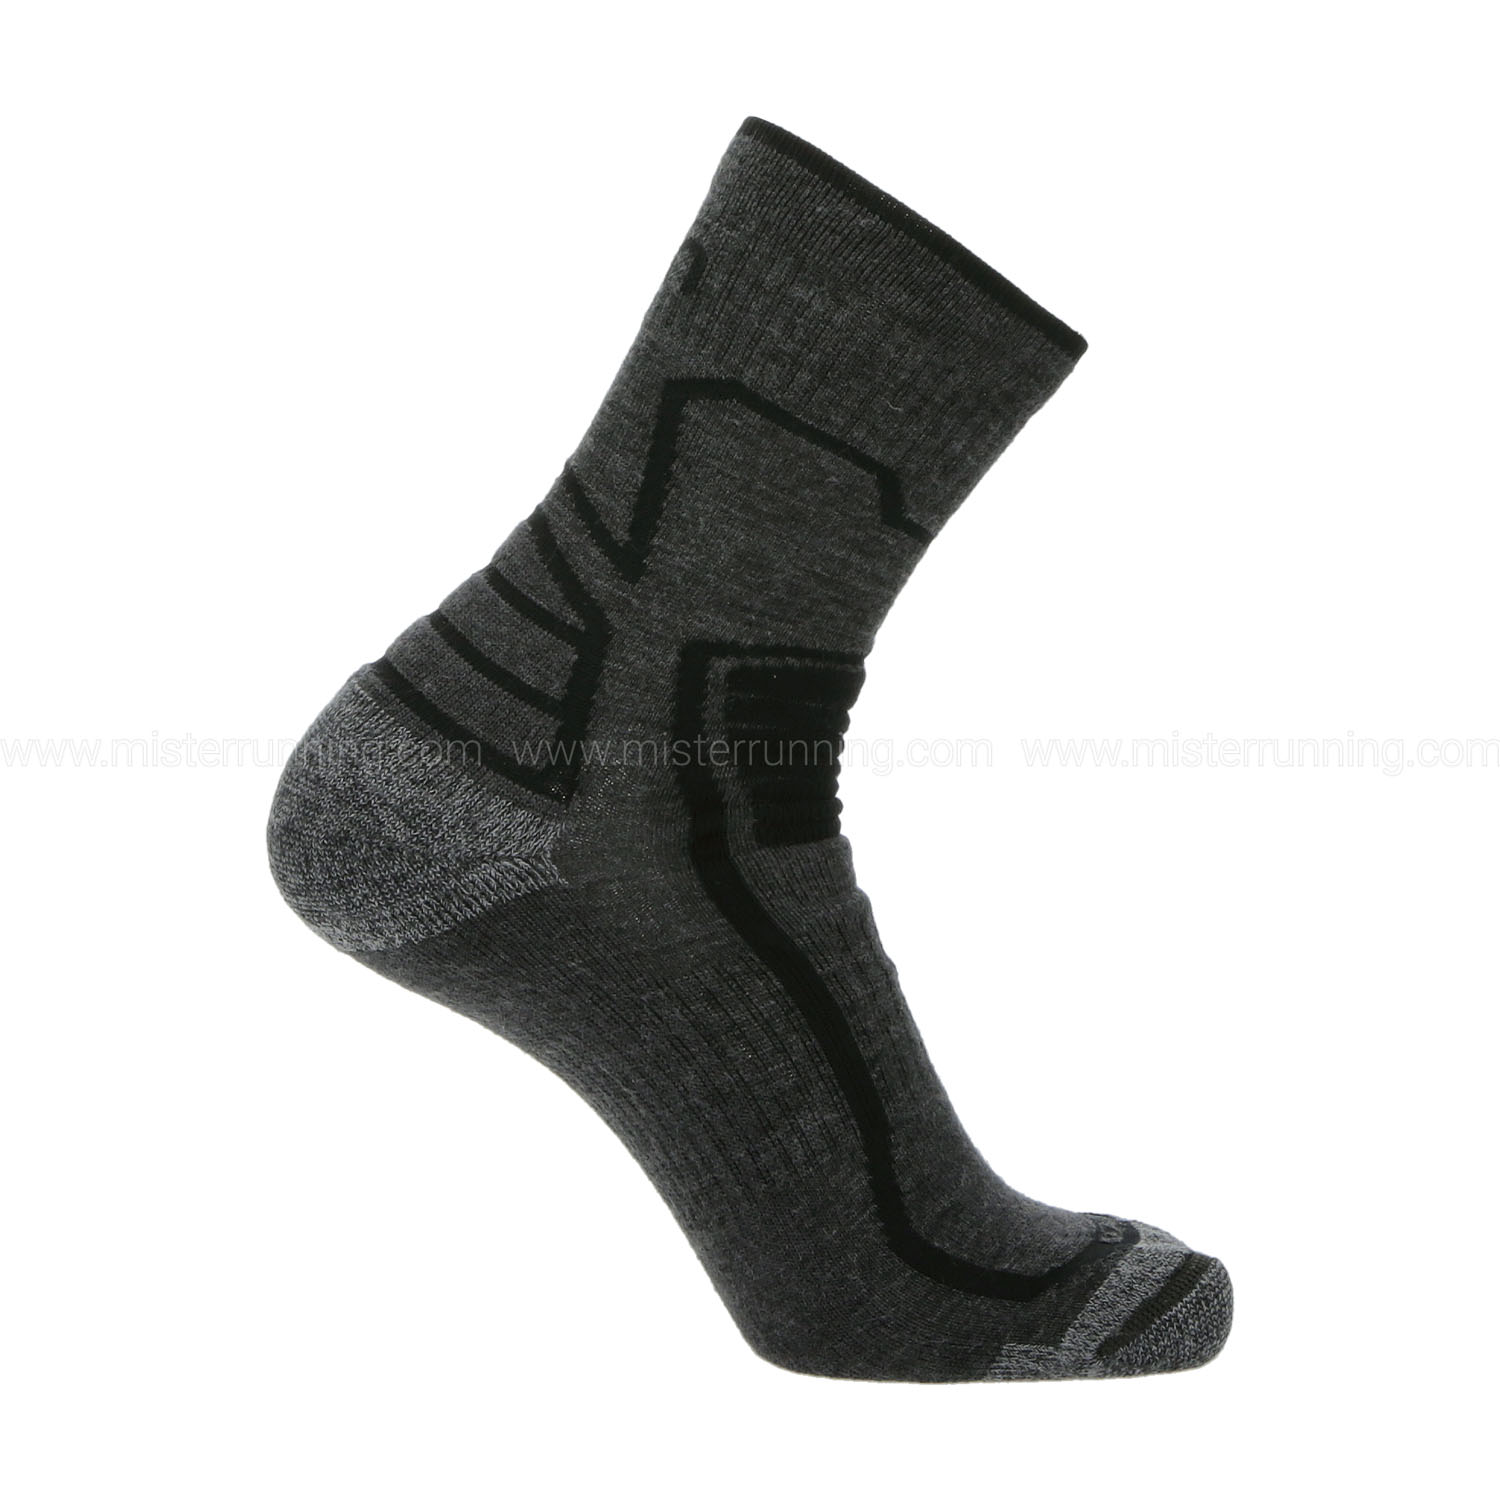 Mico Warm Control Merinos Socks - Antracite Melange/Nero